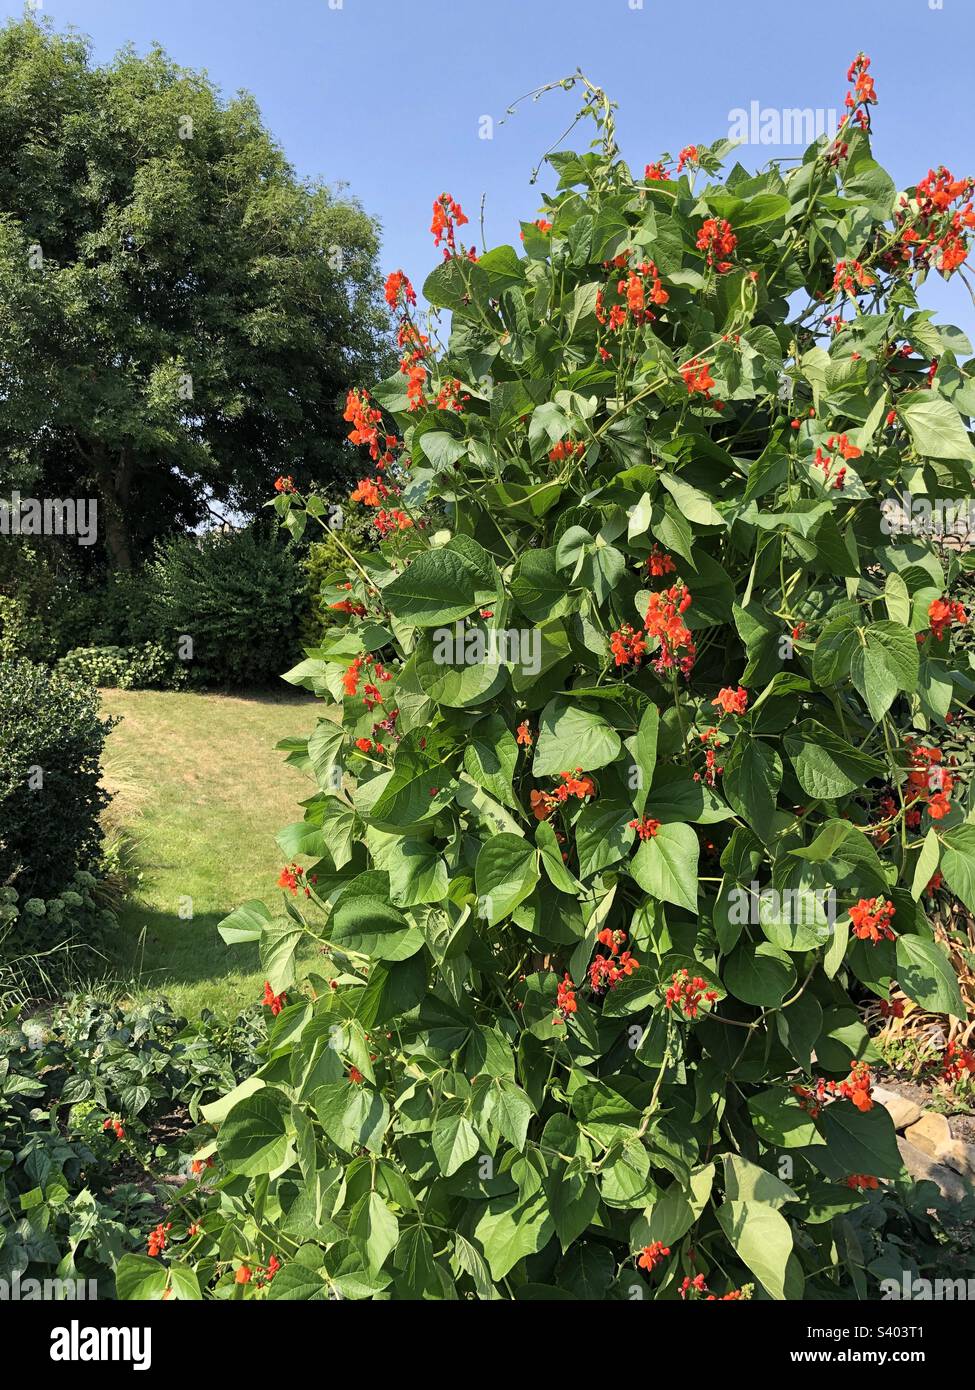 Runner beans in flower in a garden in summer, United Kingdom Stock Photo